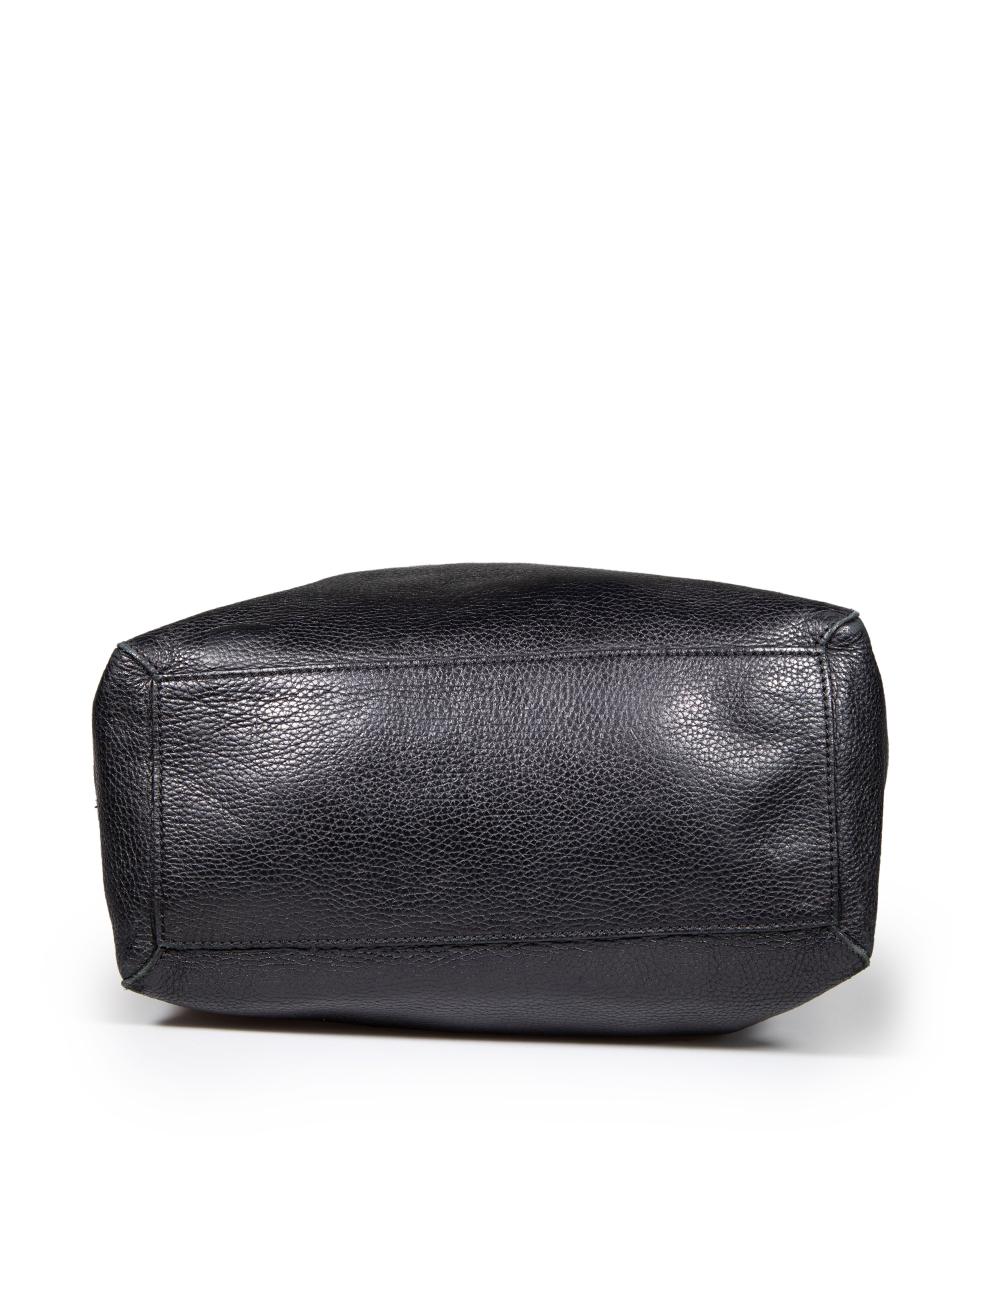 Women's Etro Black Leather Medium Tote Bag For Sale